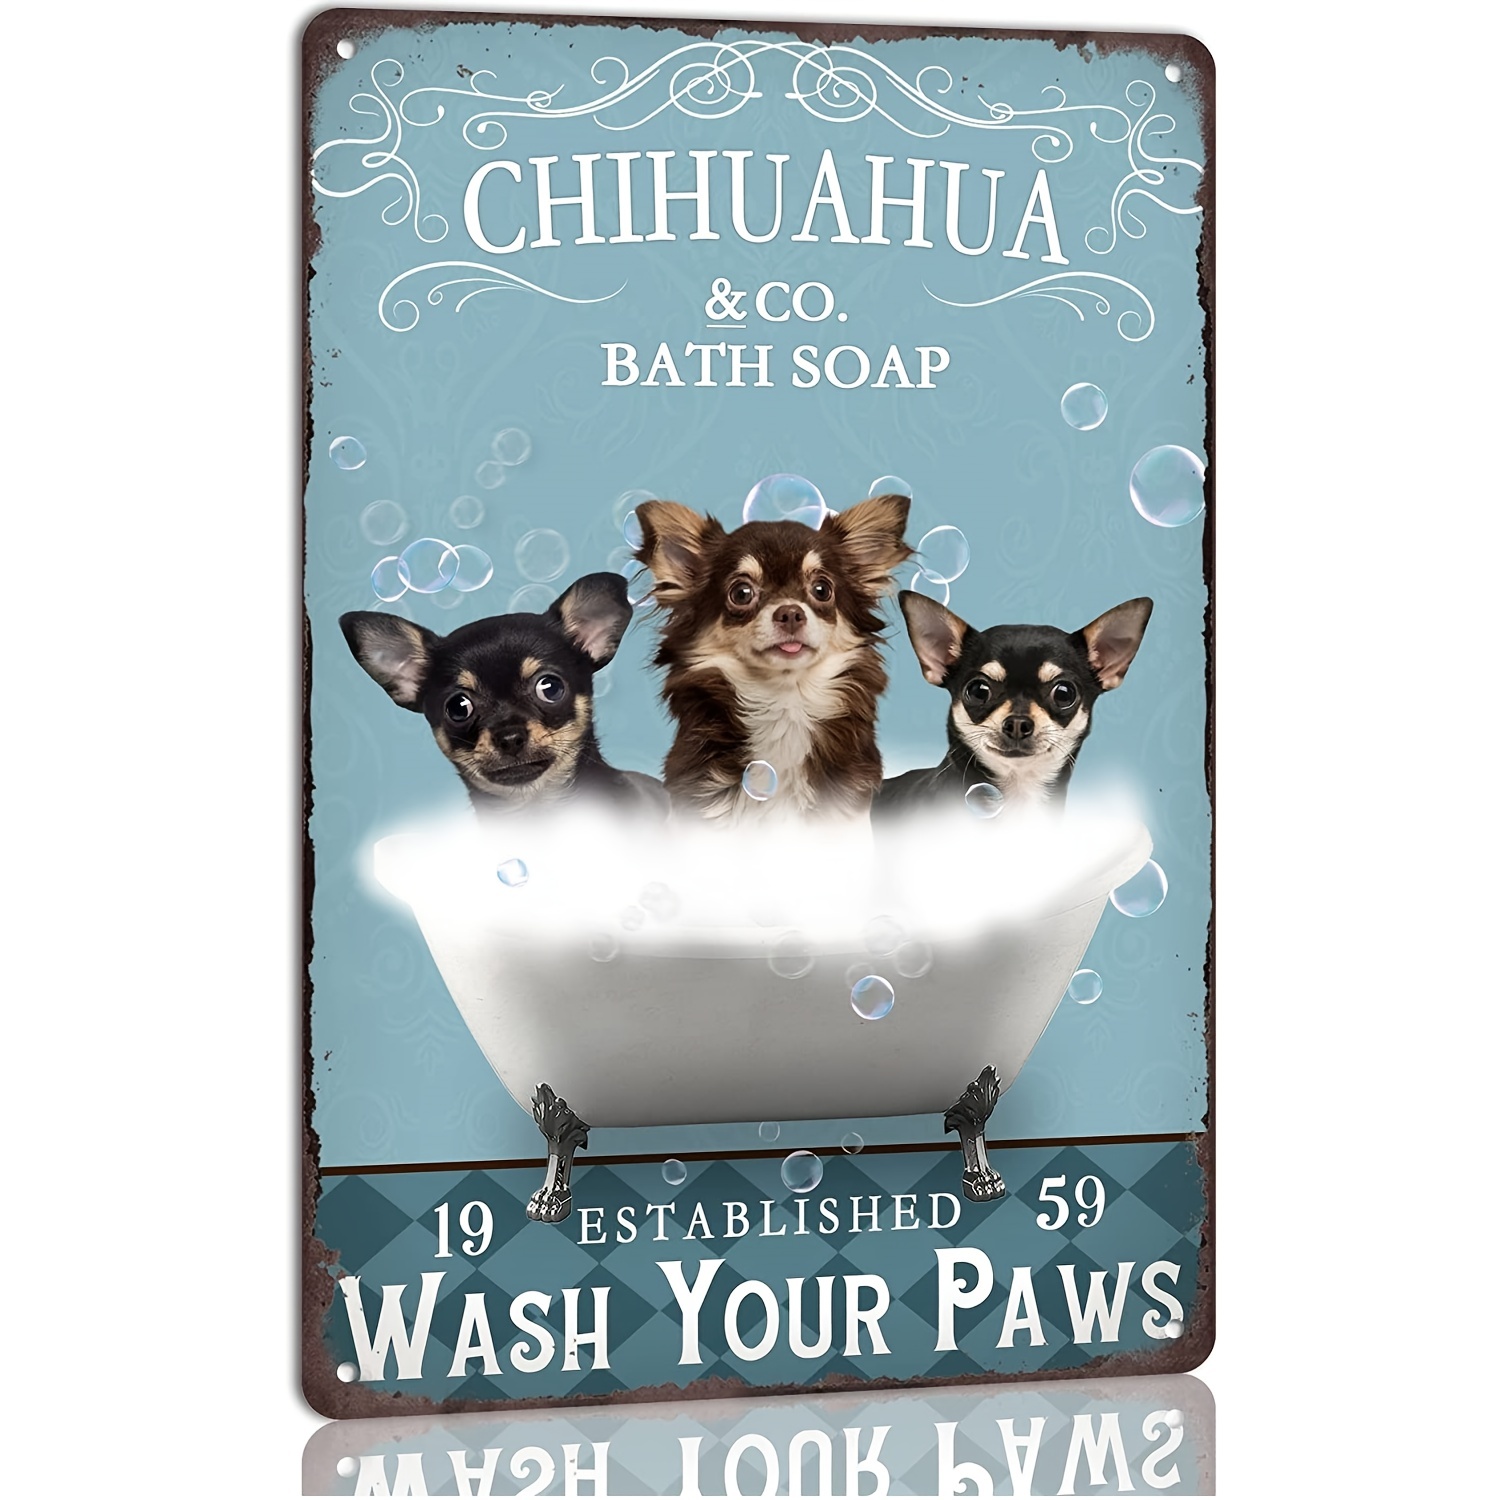 DOG.Chihuahua in handbag available as Framed Prints, Photos, Wall Art and  Photo Gifts